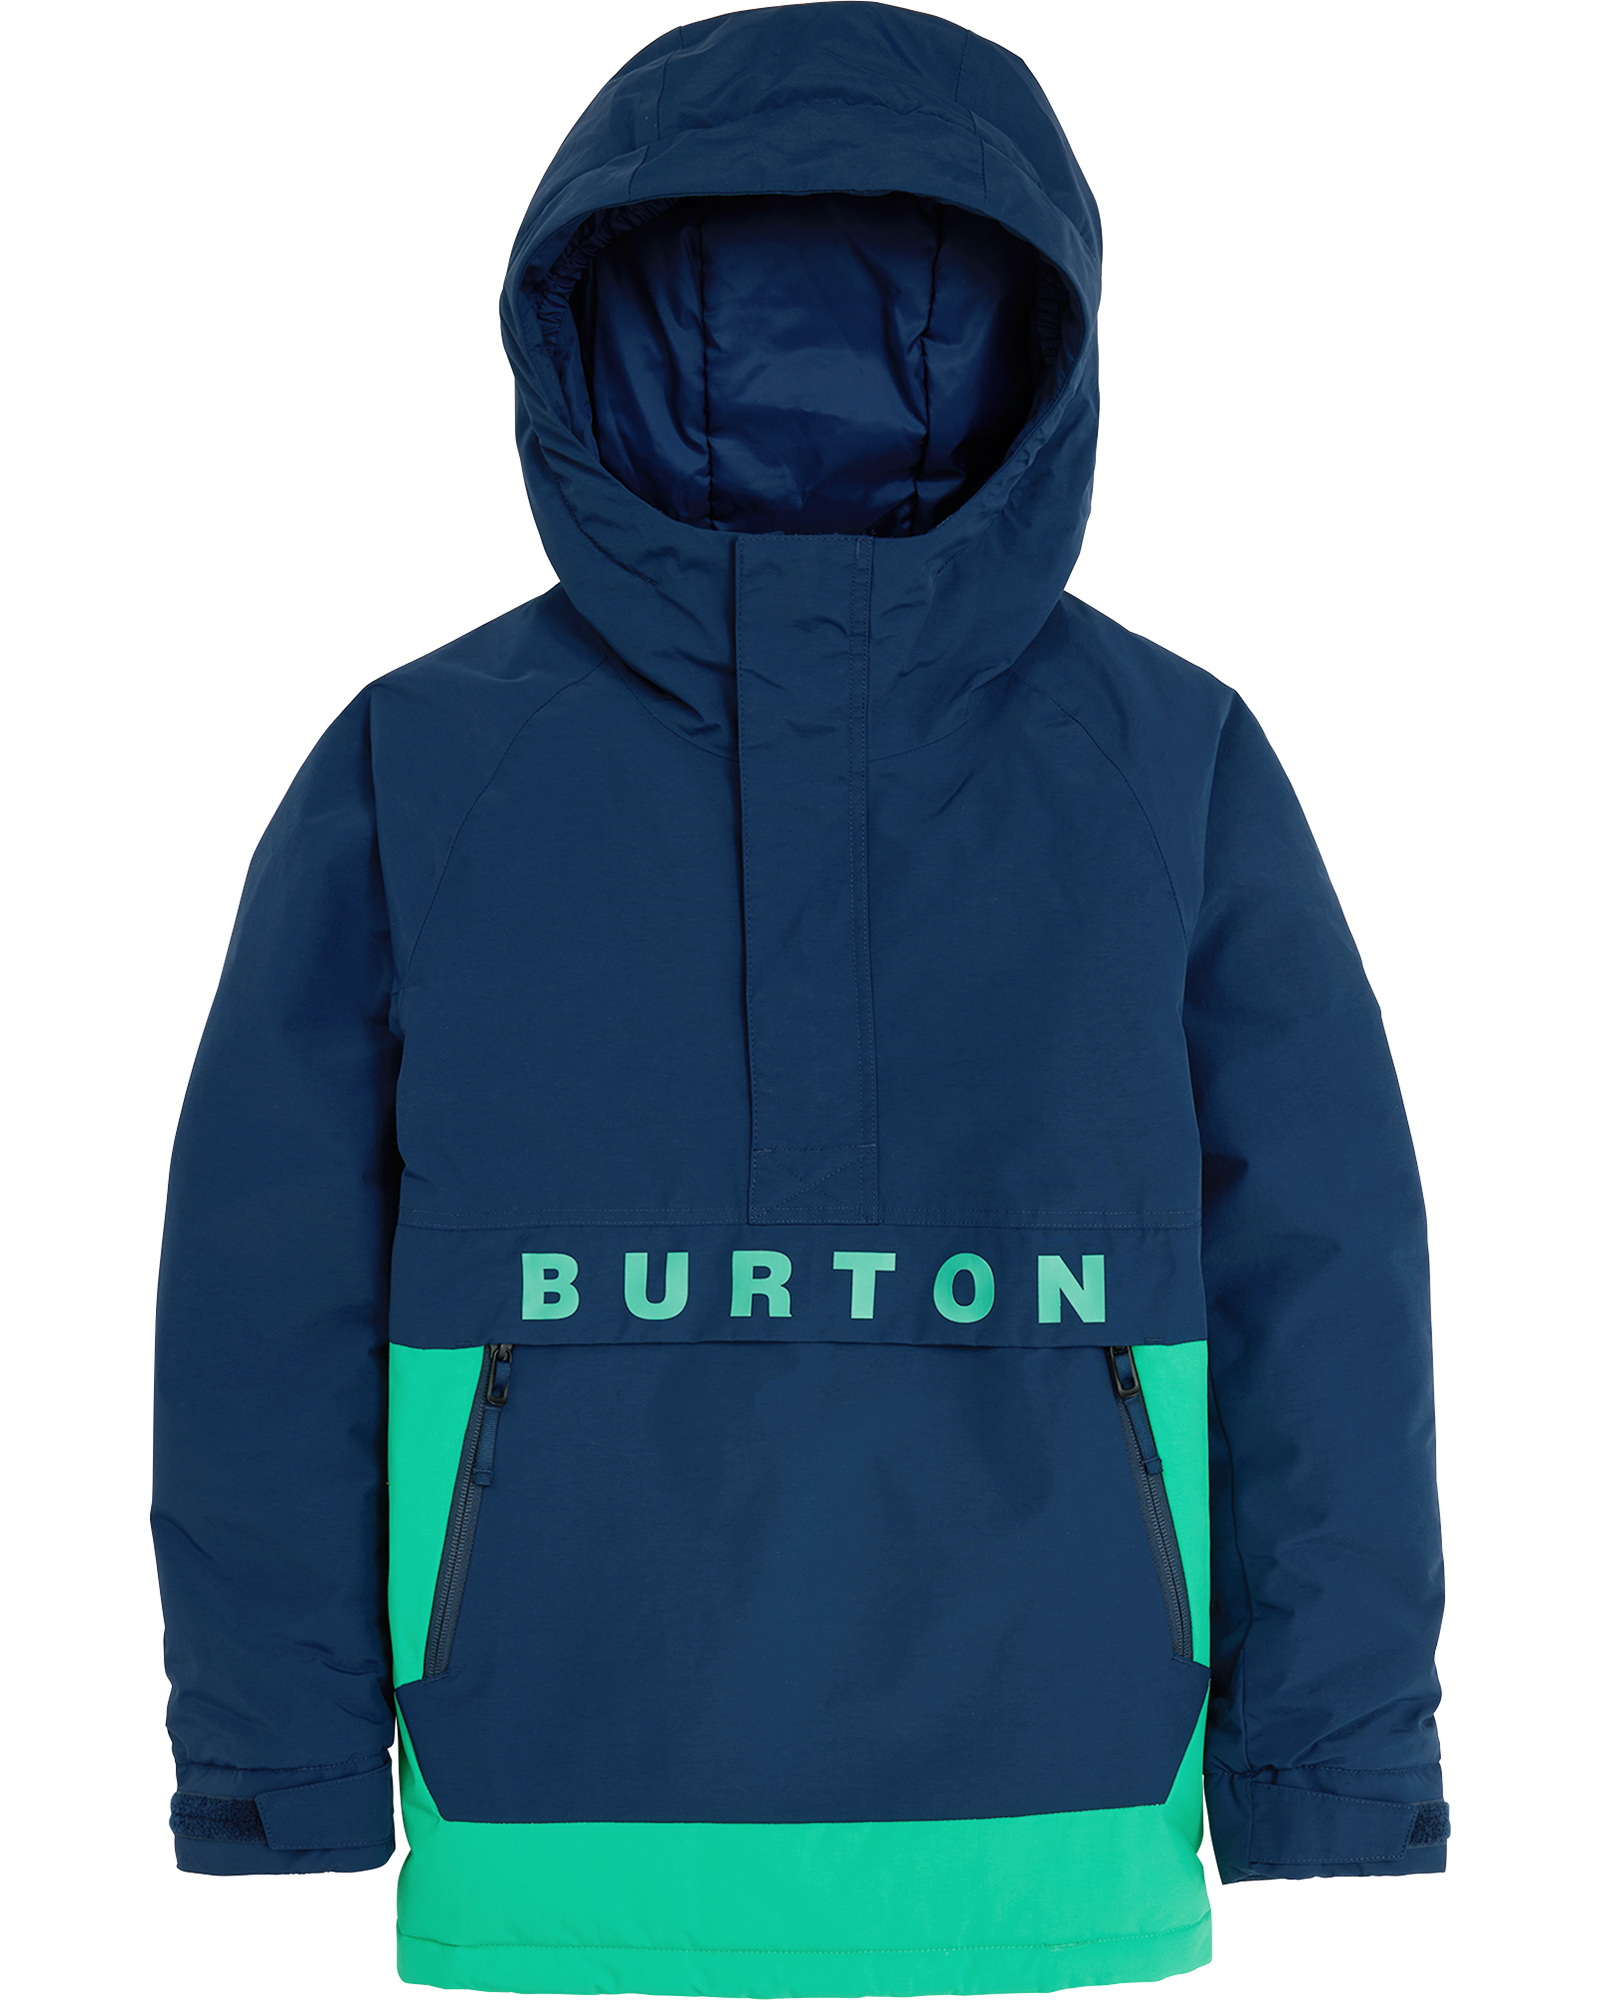 Burton Frostner 2L Kids’ Jacket - Dress Blue/Galaxy Green S